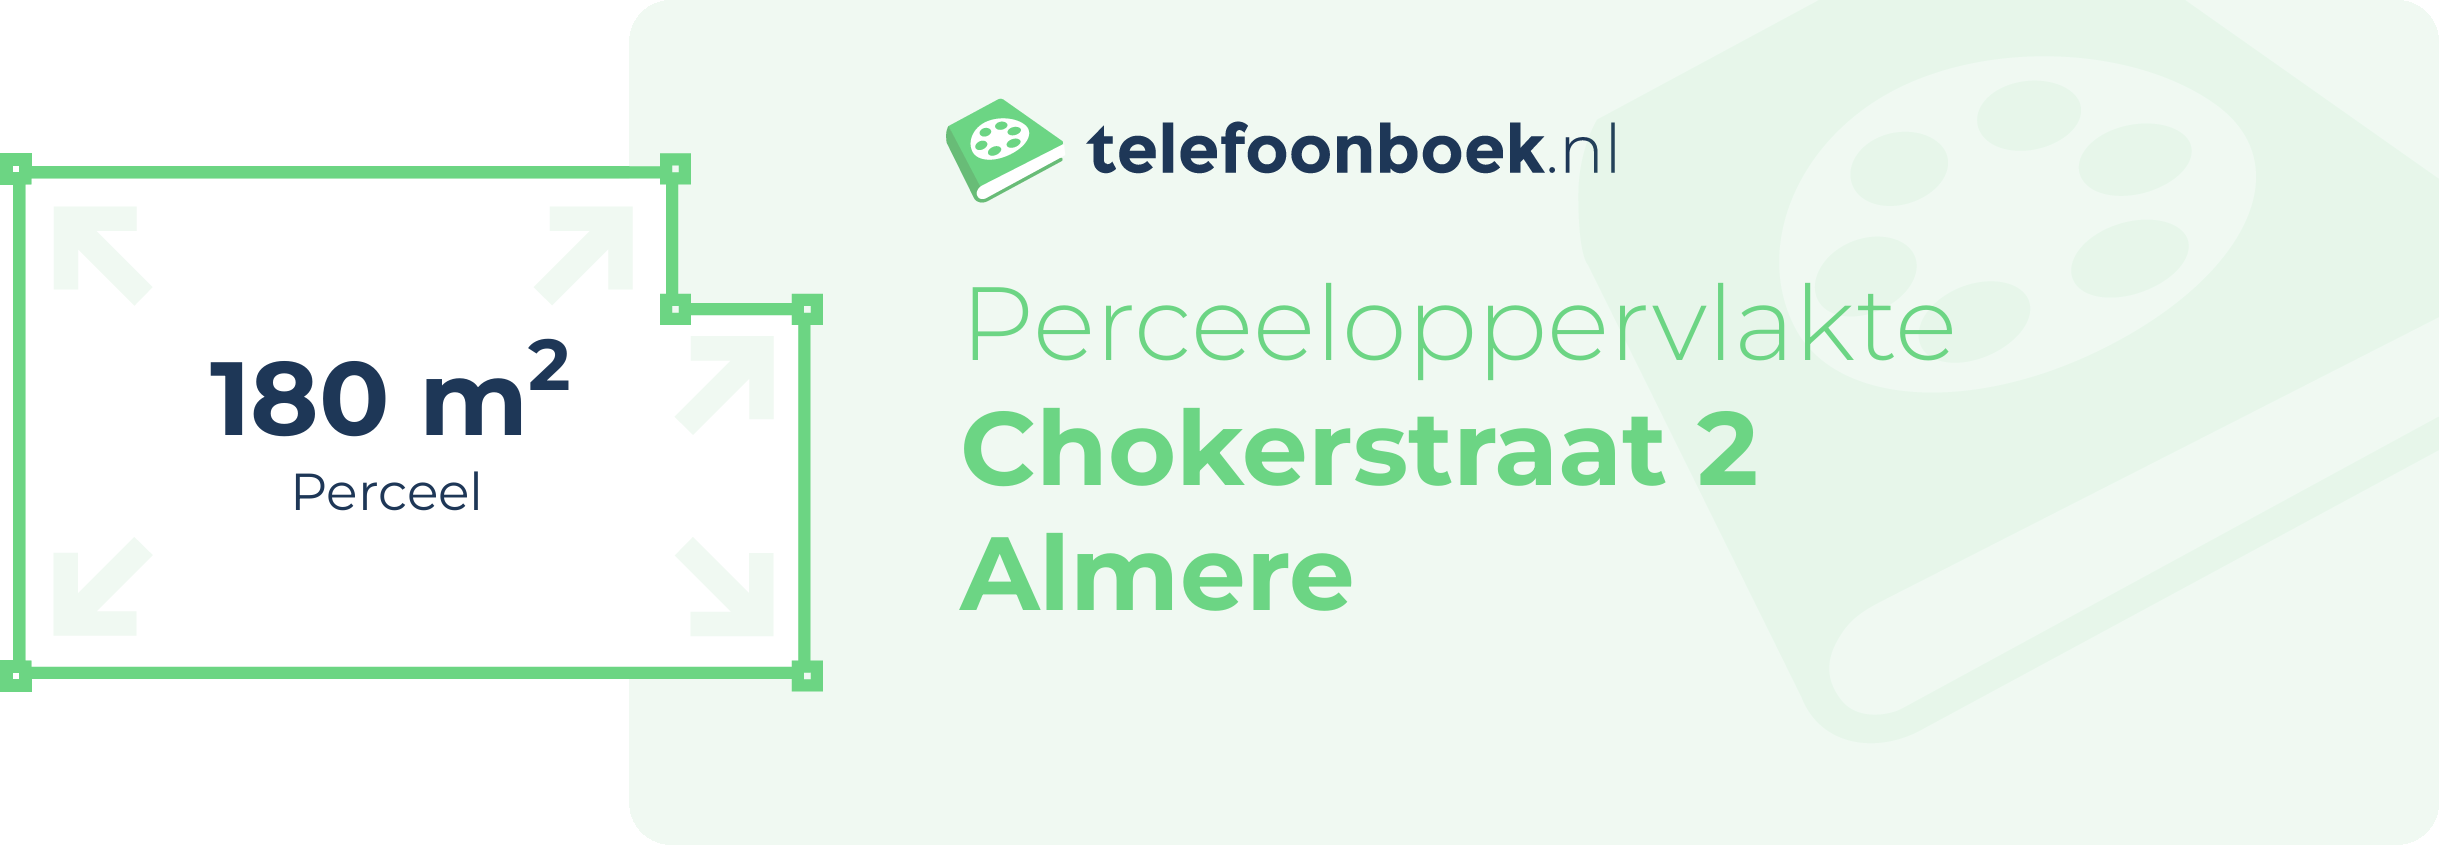 Perceeloppervlakte Chokerstraat 2 Almere